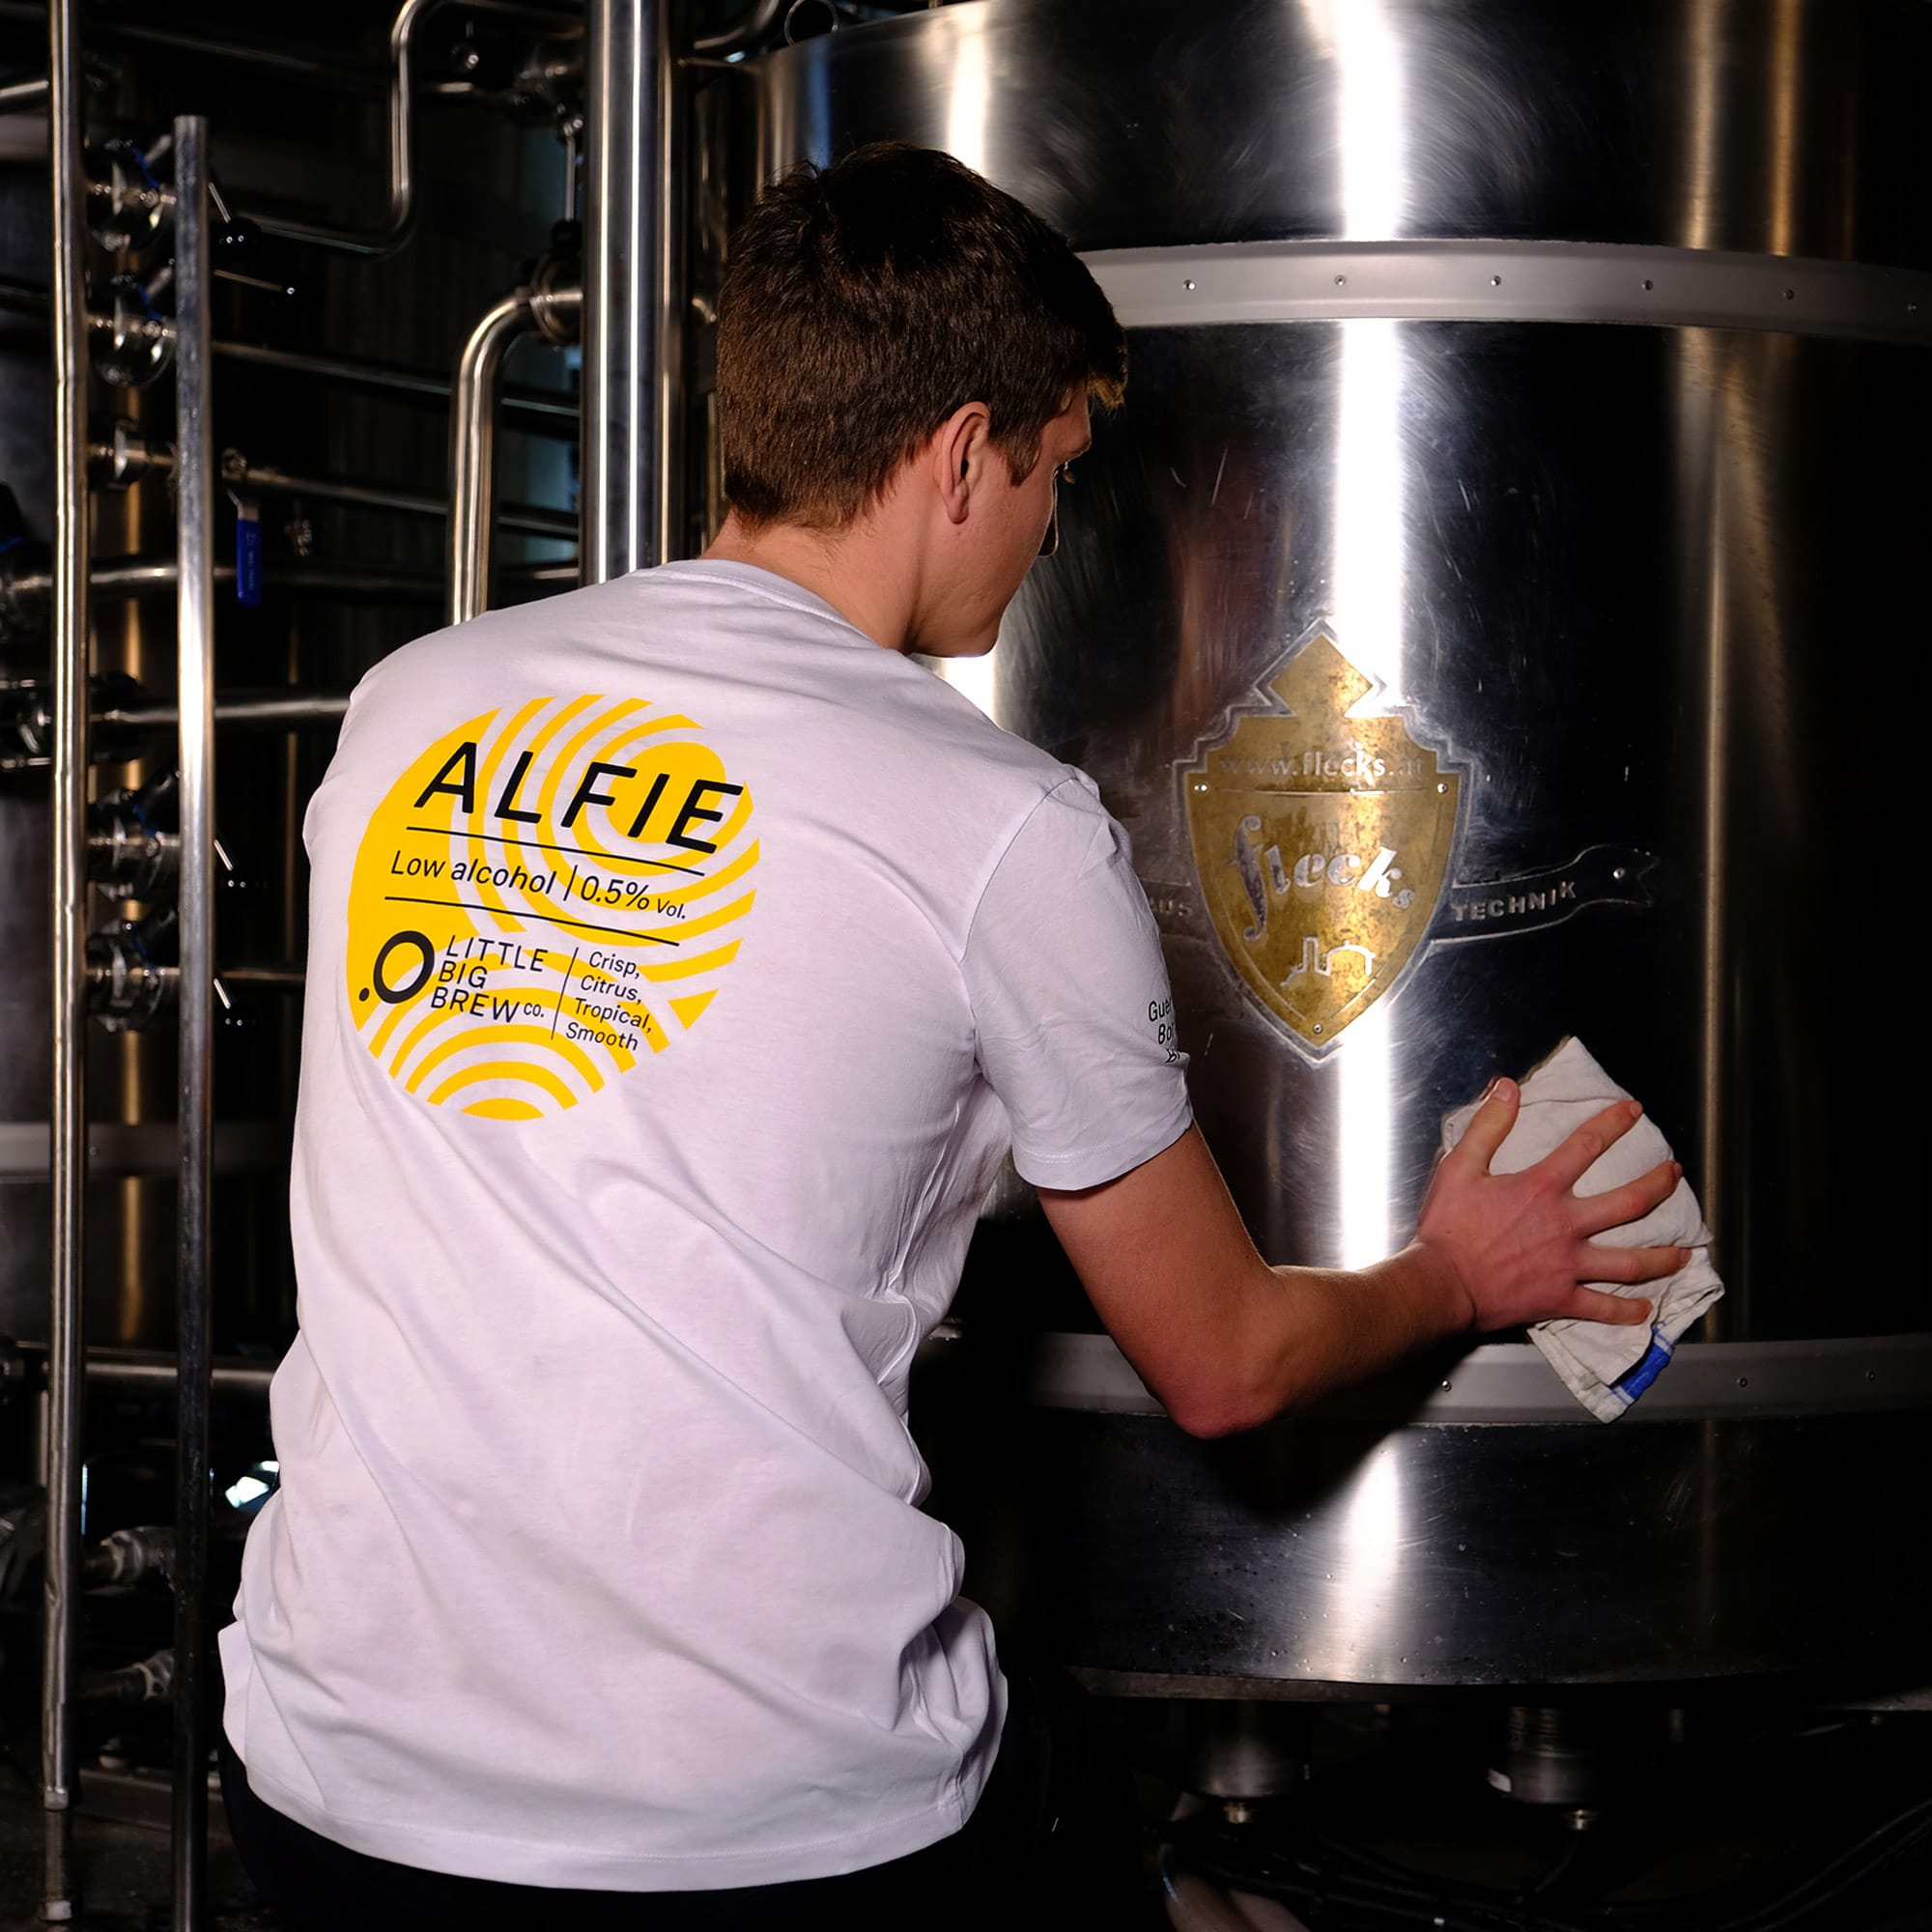 Little Big Brew Co. Alfie T-shirt